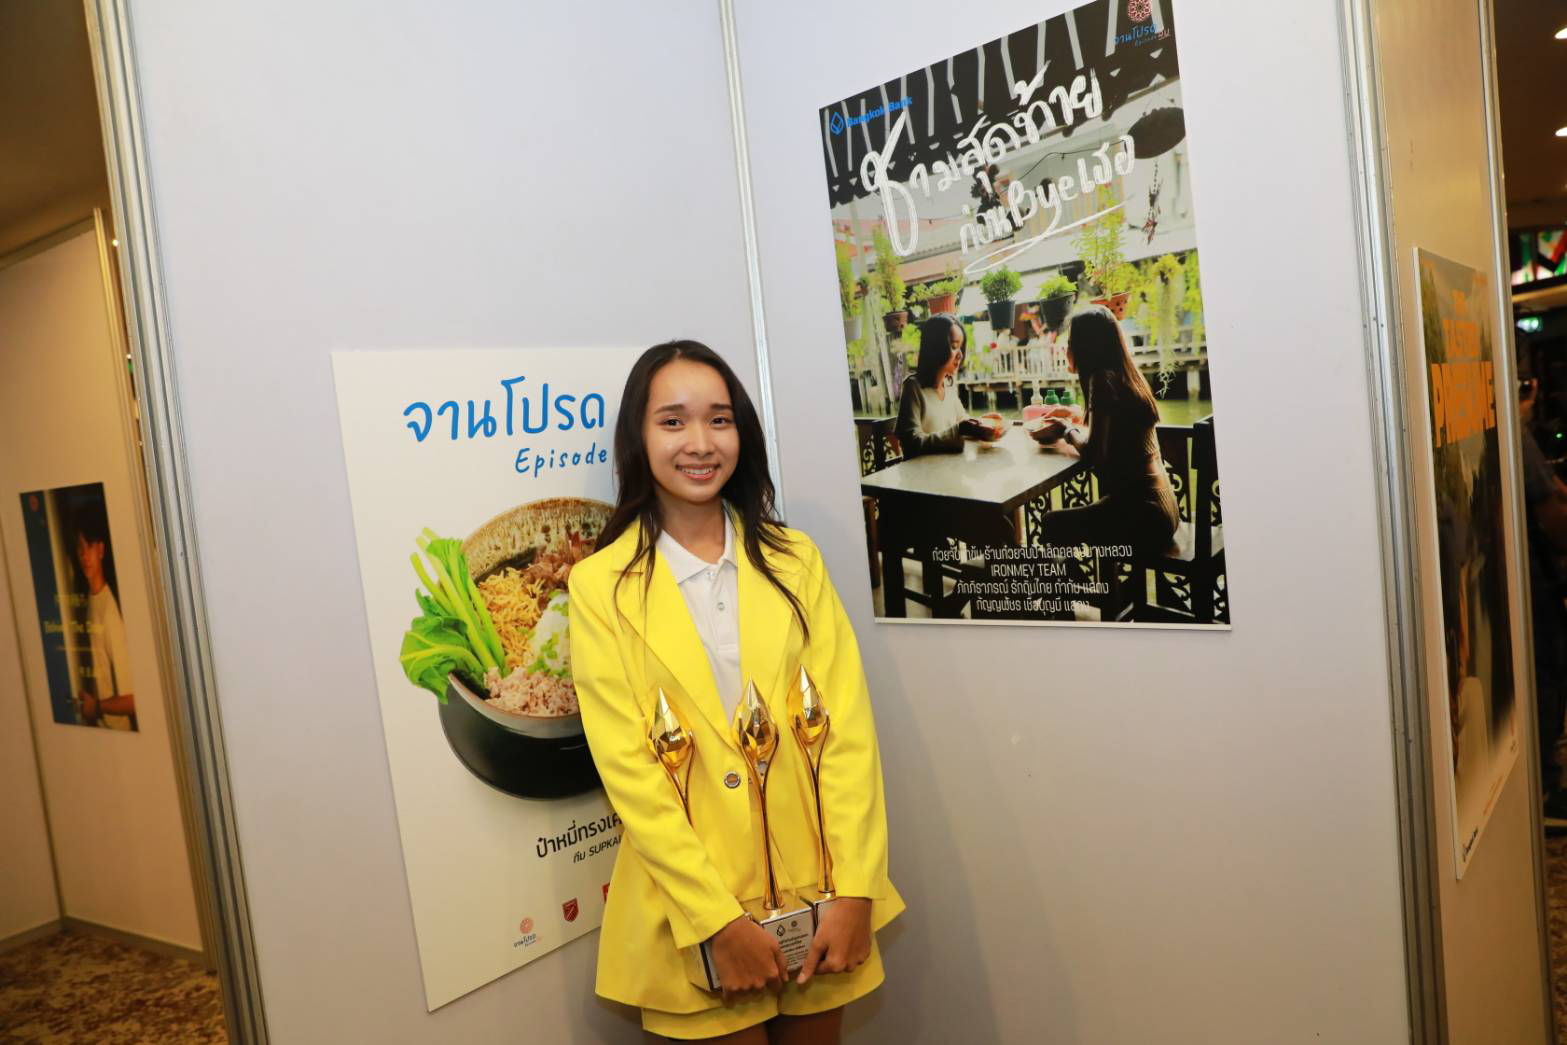 Bangkok Bank Announces Winners Of First “favourite Dish, Secret Episode” Project